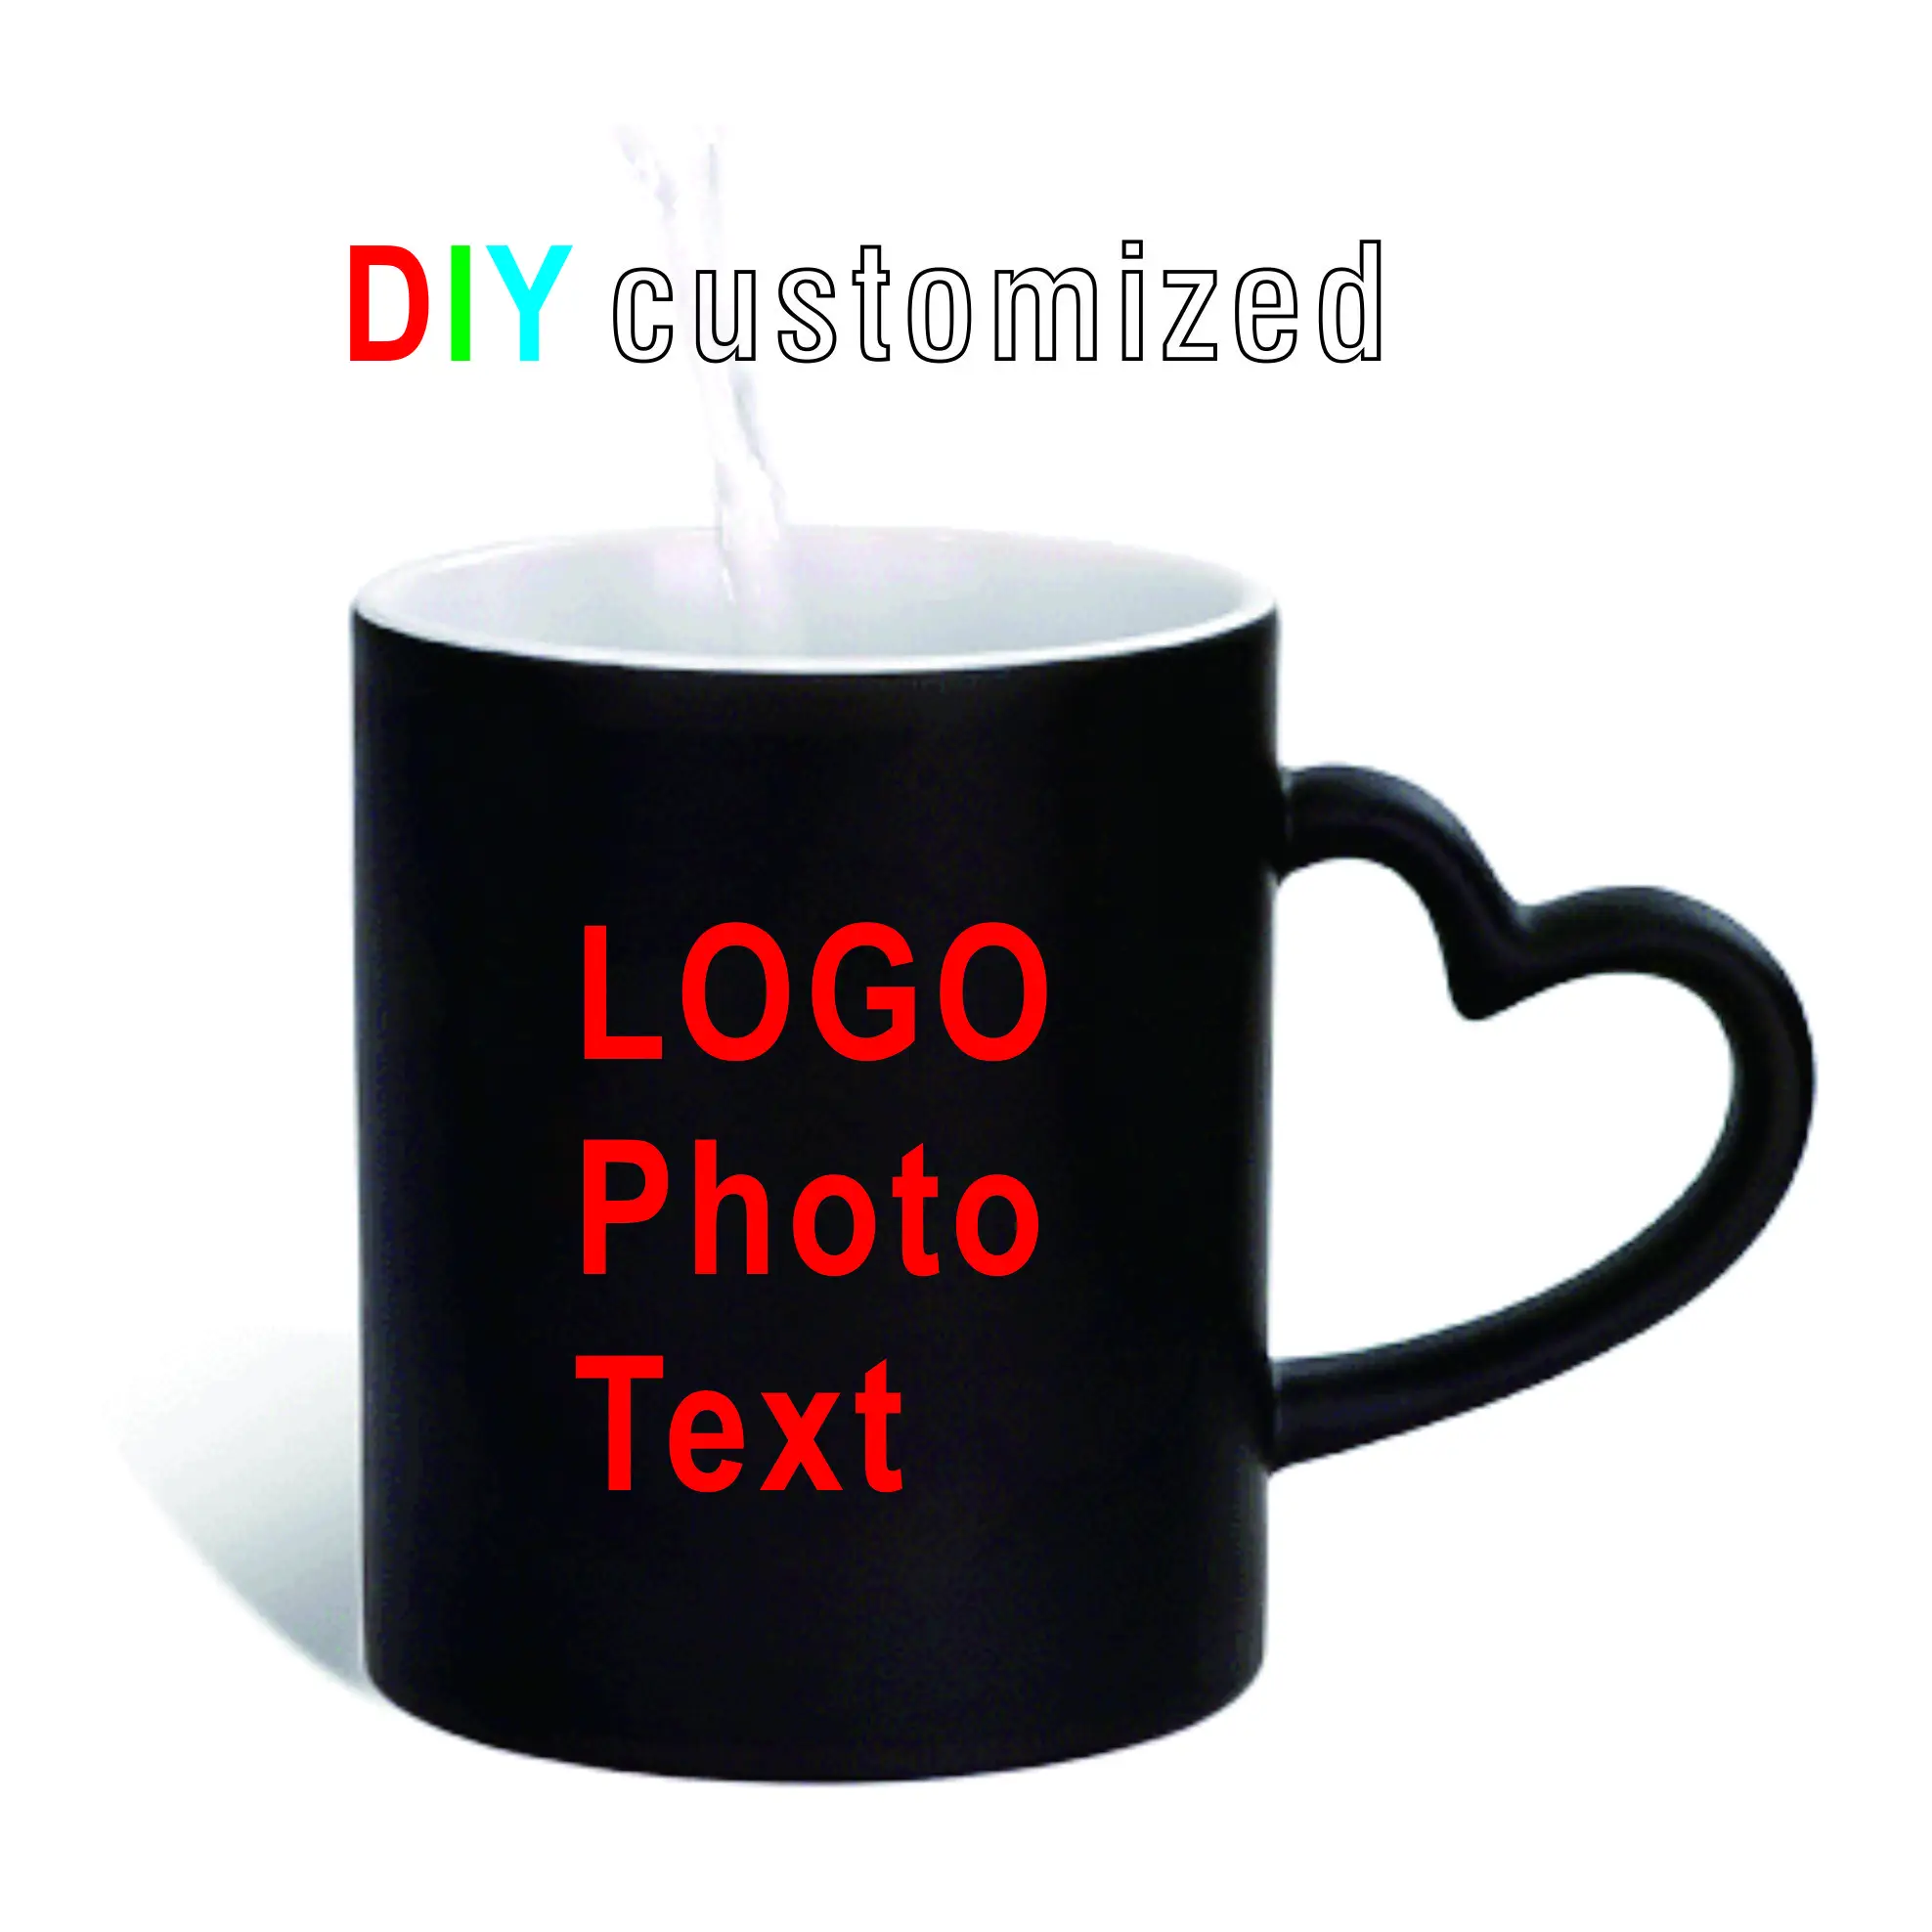 

DIY Customized 350ML 12oz Ceramic Magic Mug Picture Photo LOGO Text Water Change Color Sublimation Print Hot Transfer